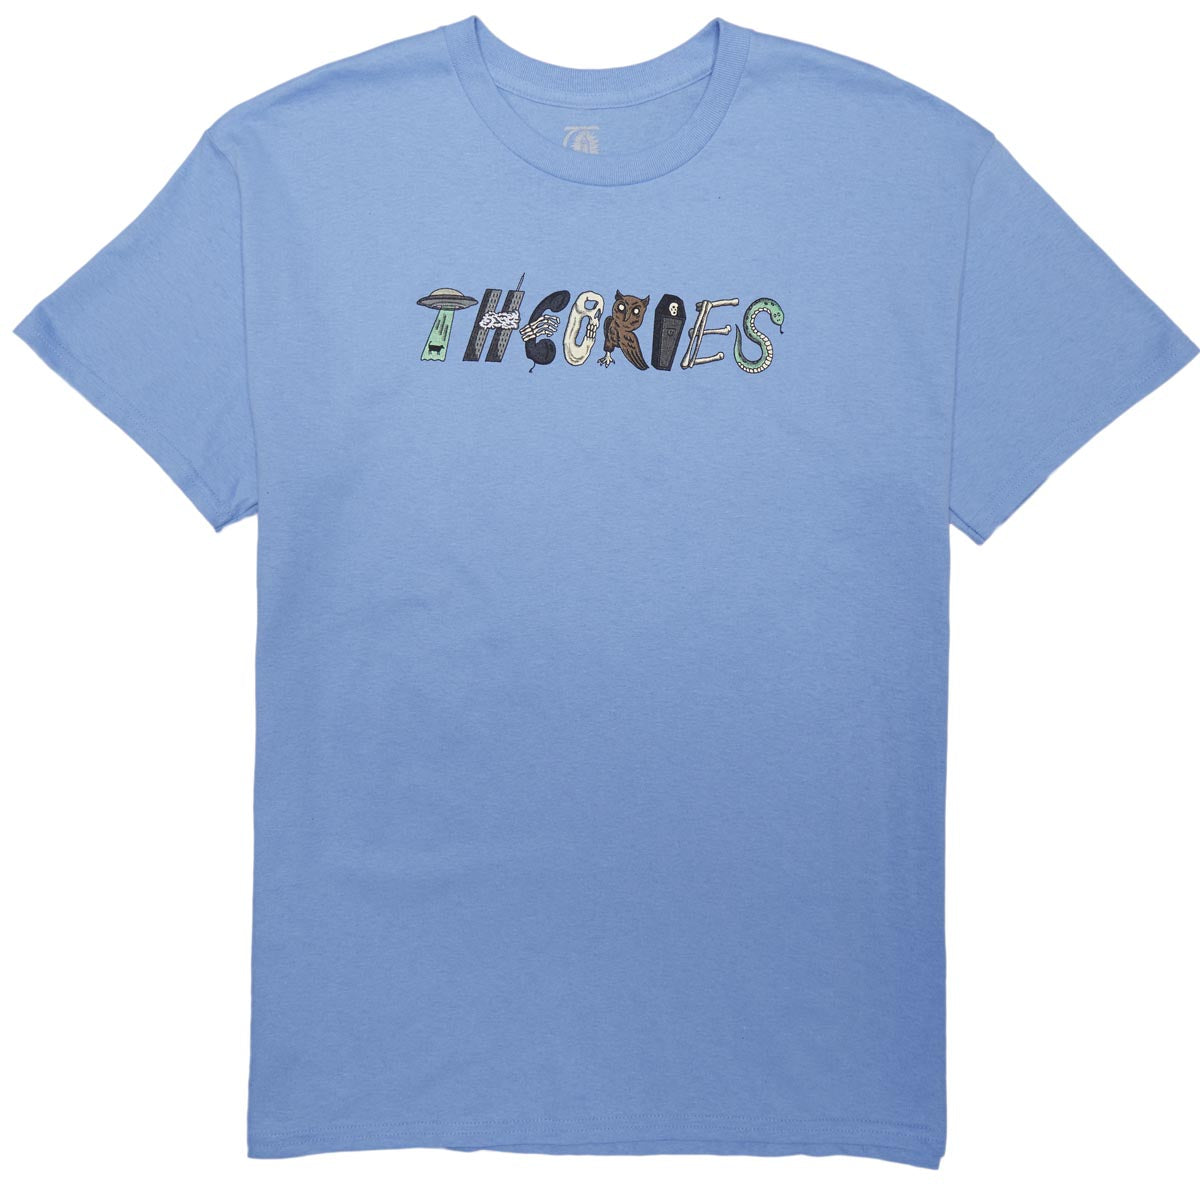 Theories Symbols T-Shirt - Light Blue image 1